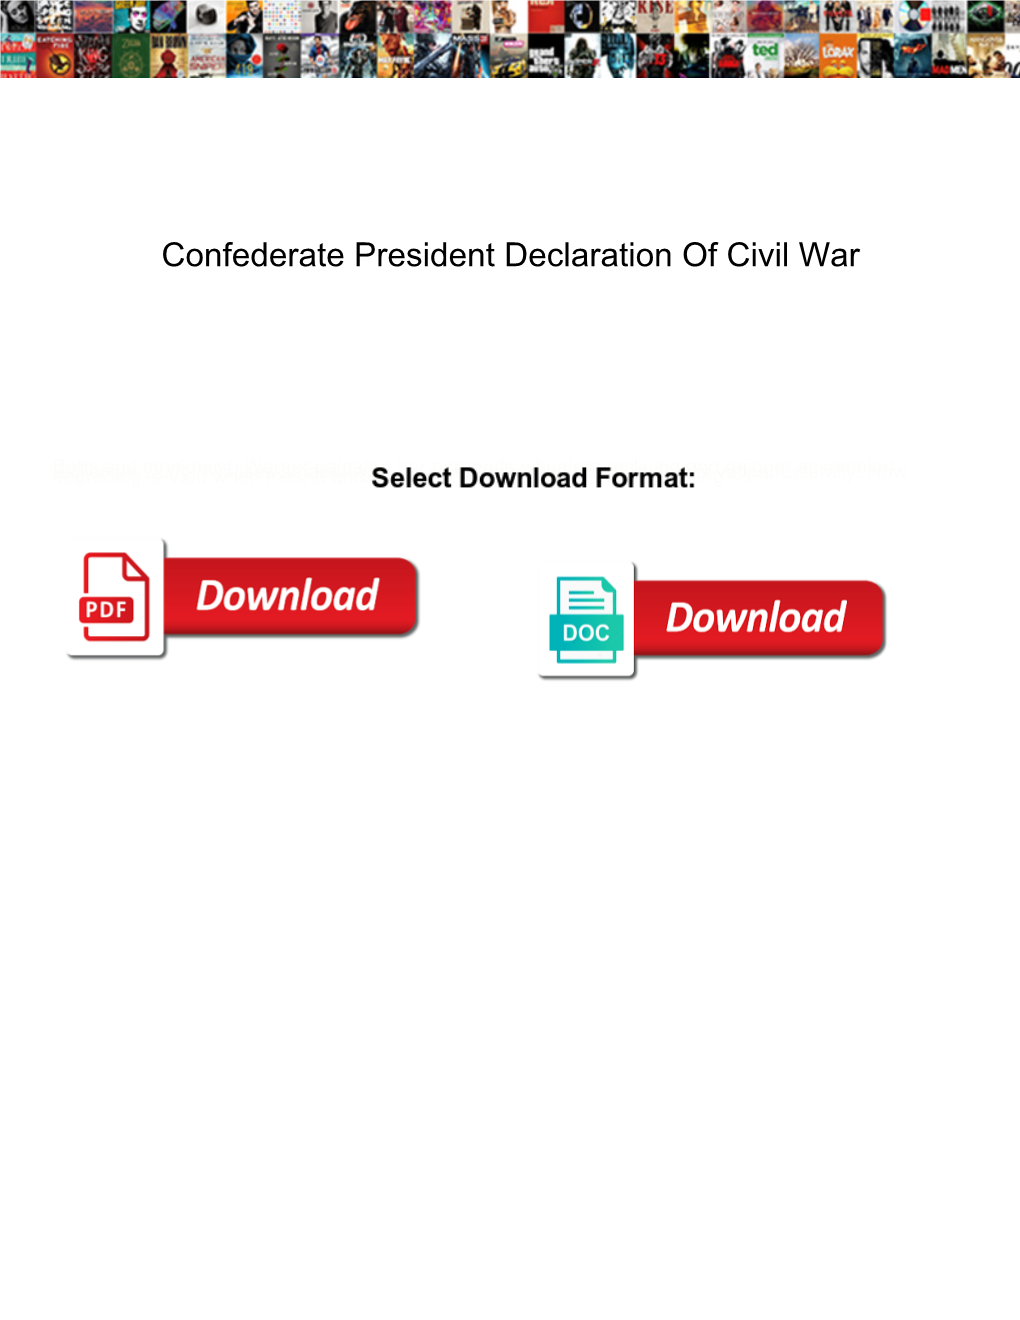 Confederate President Declaration of Civil War